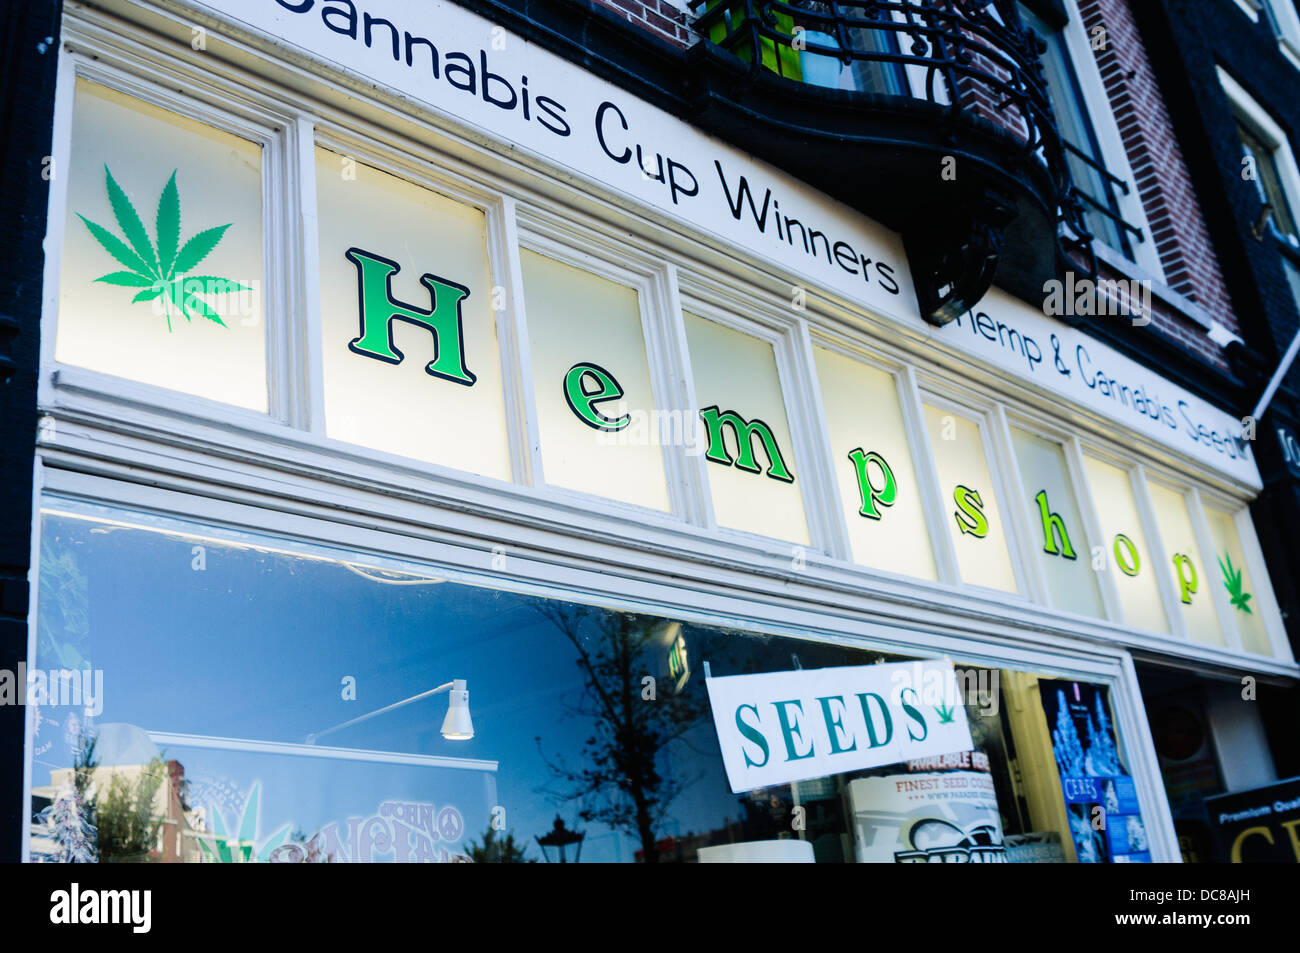 Hempshop selling marijuana seeds and smoking paraphenalia in Amsterdam Stock Photo